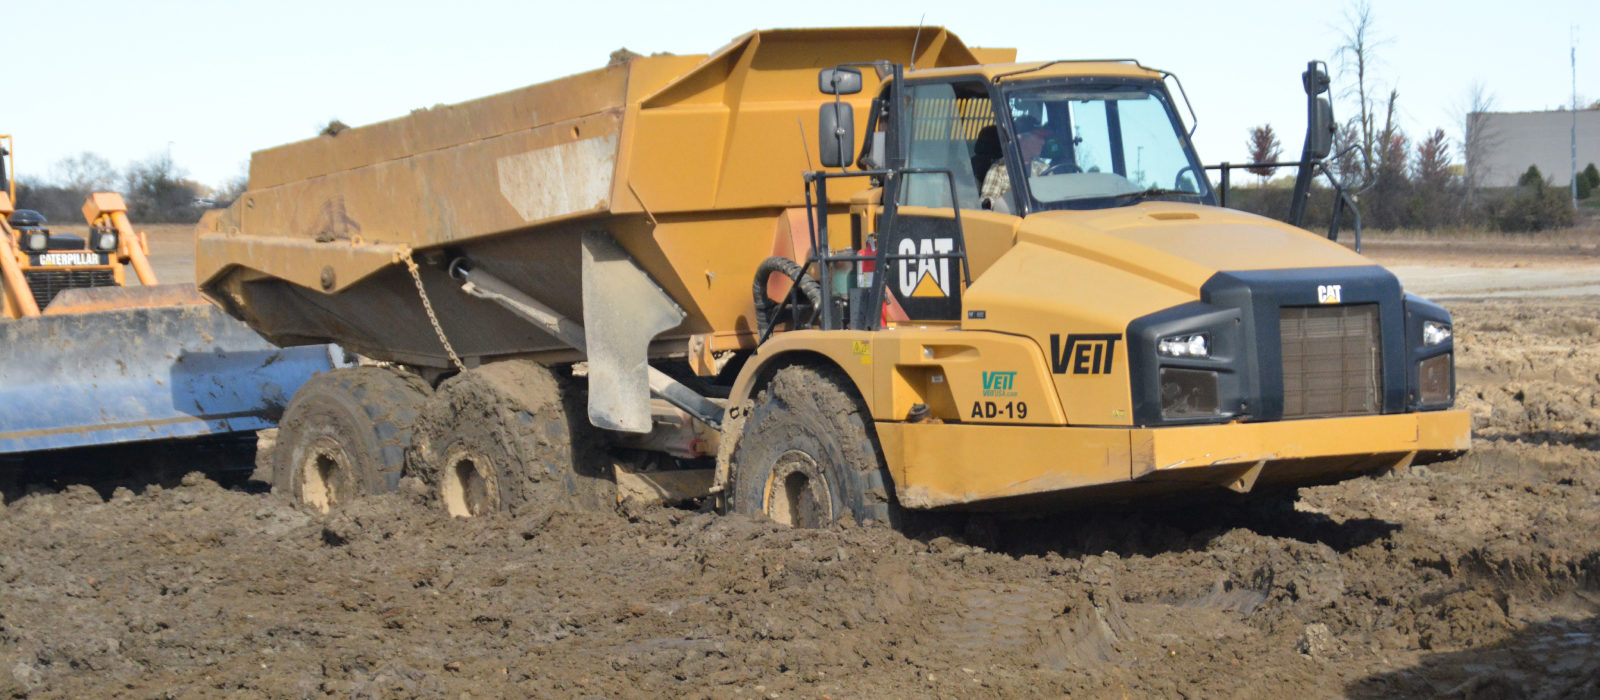 Veit's CAT Dumptruck And Bulldozer On The Dirt